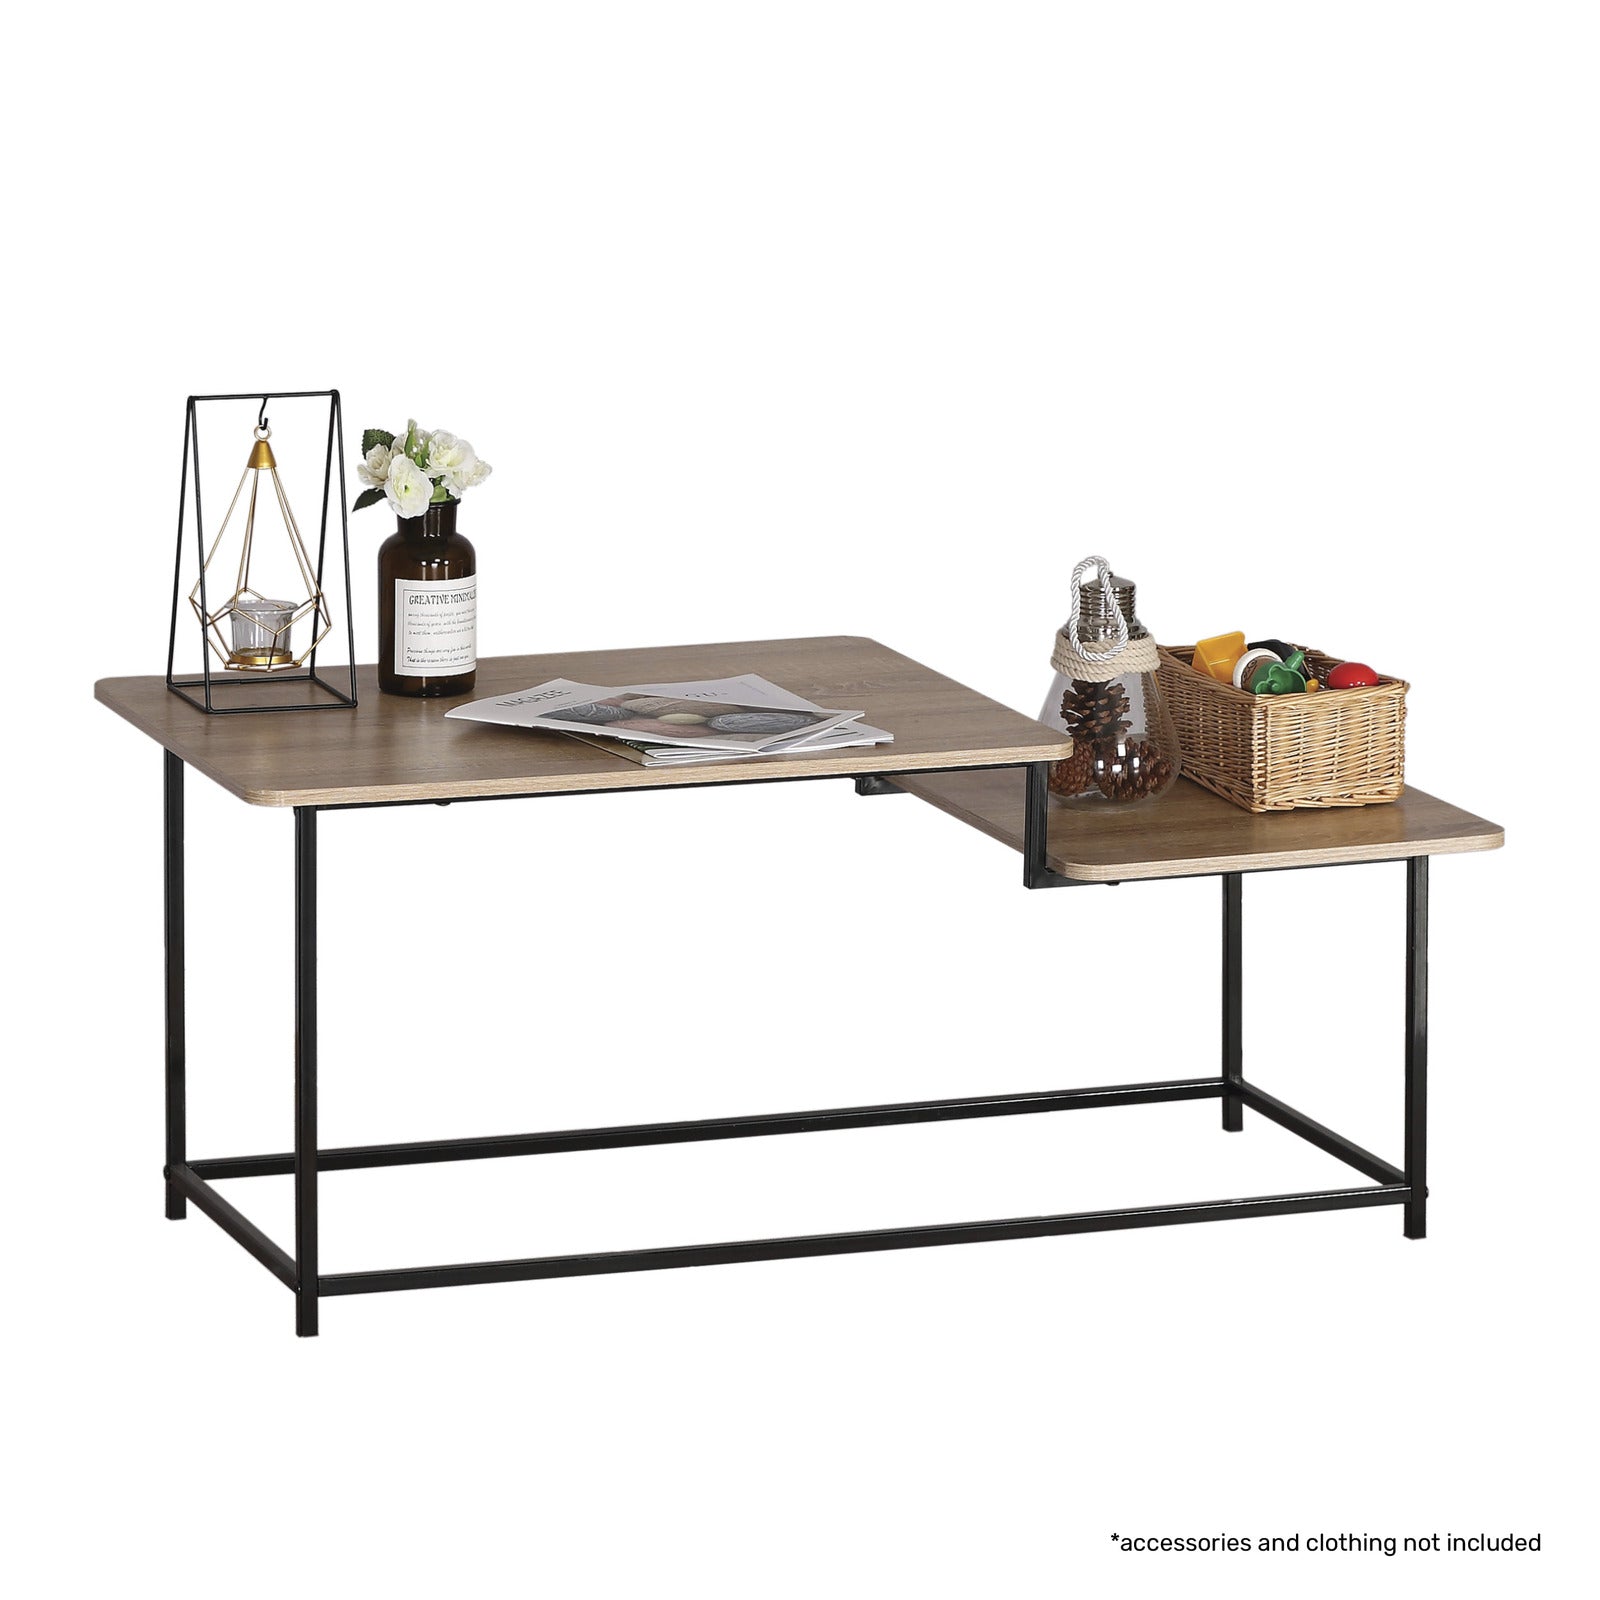 Home Master Coffee Table 2 Tier Split Level Stylish Modern Design 1.09m Deals499